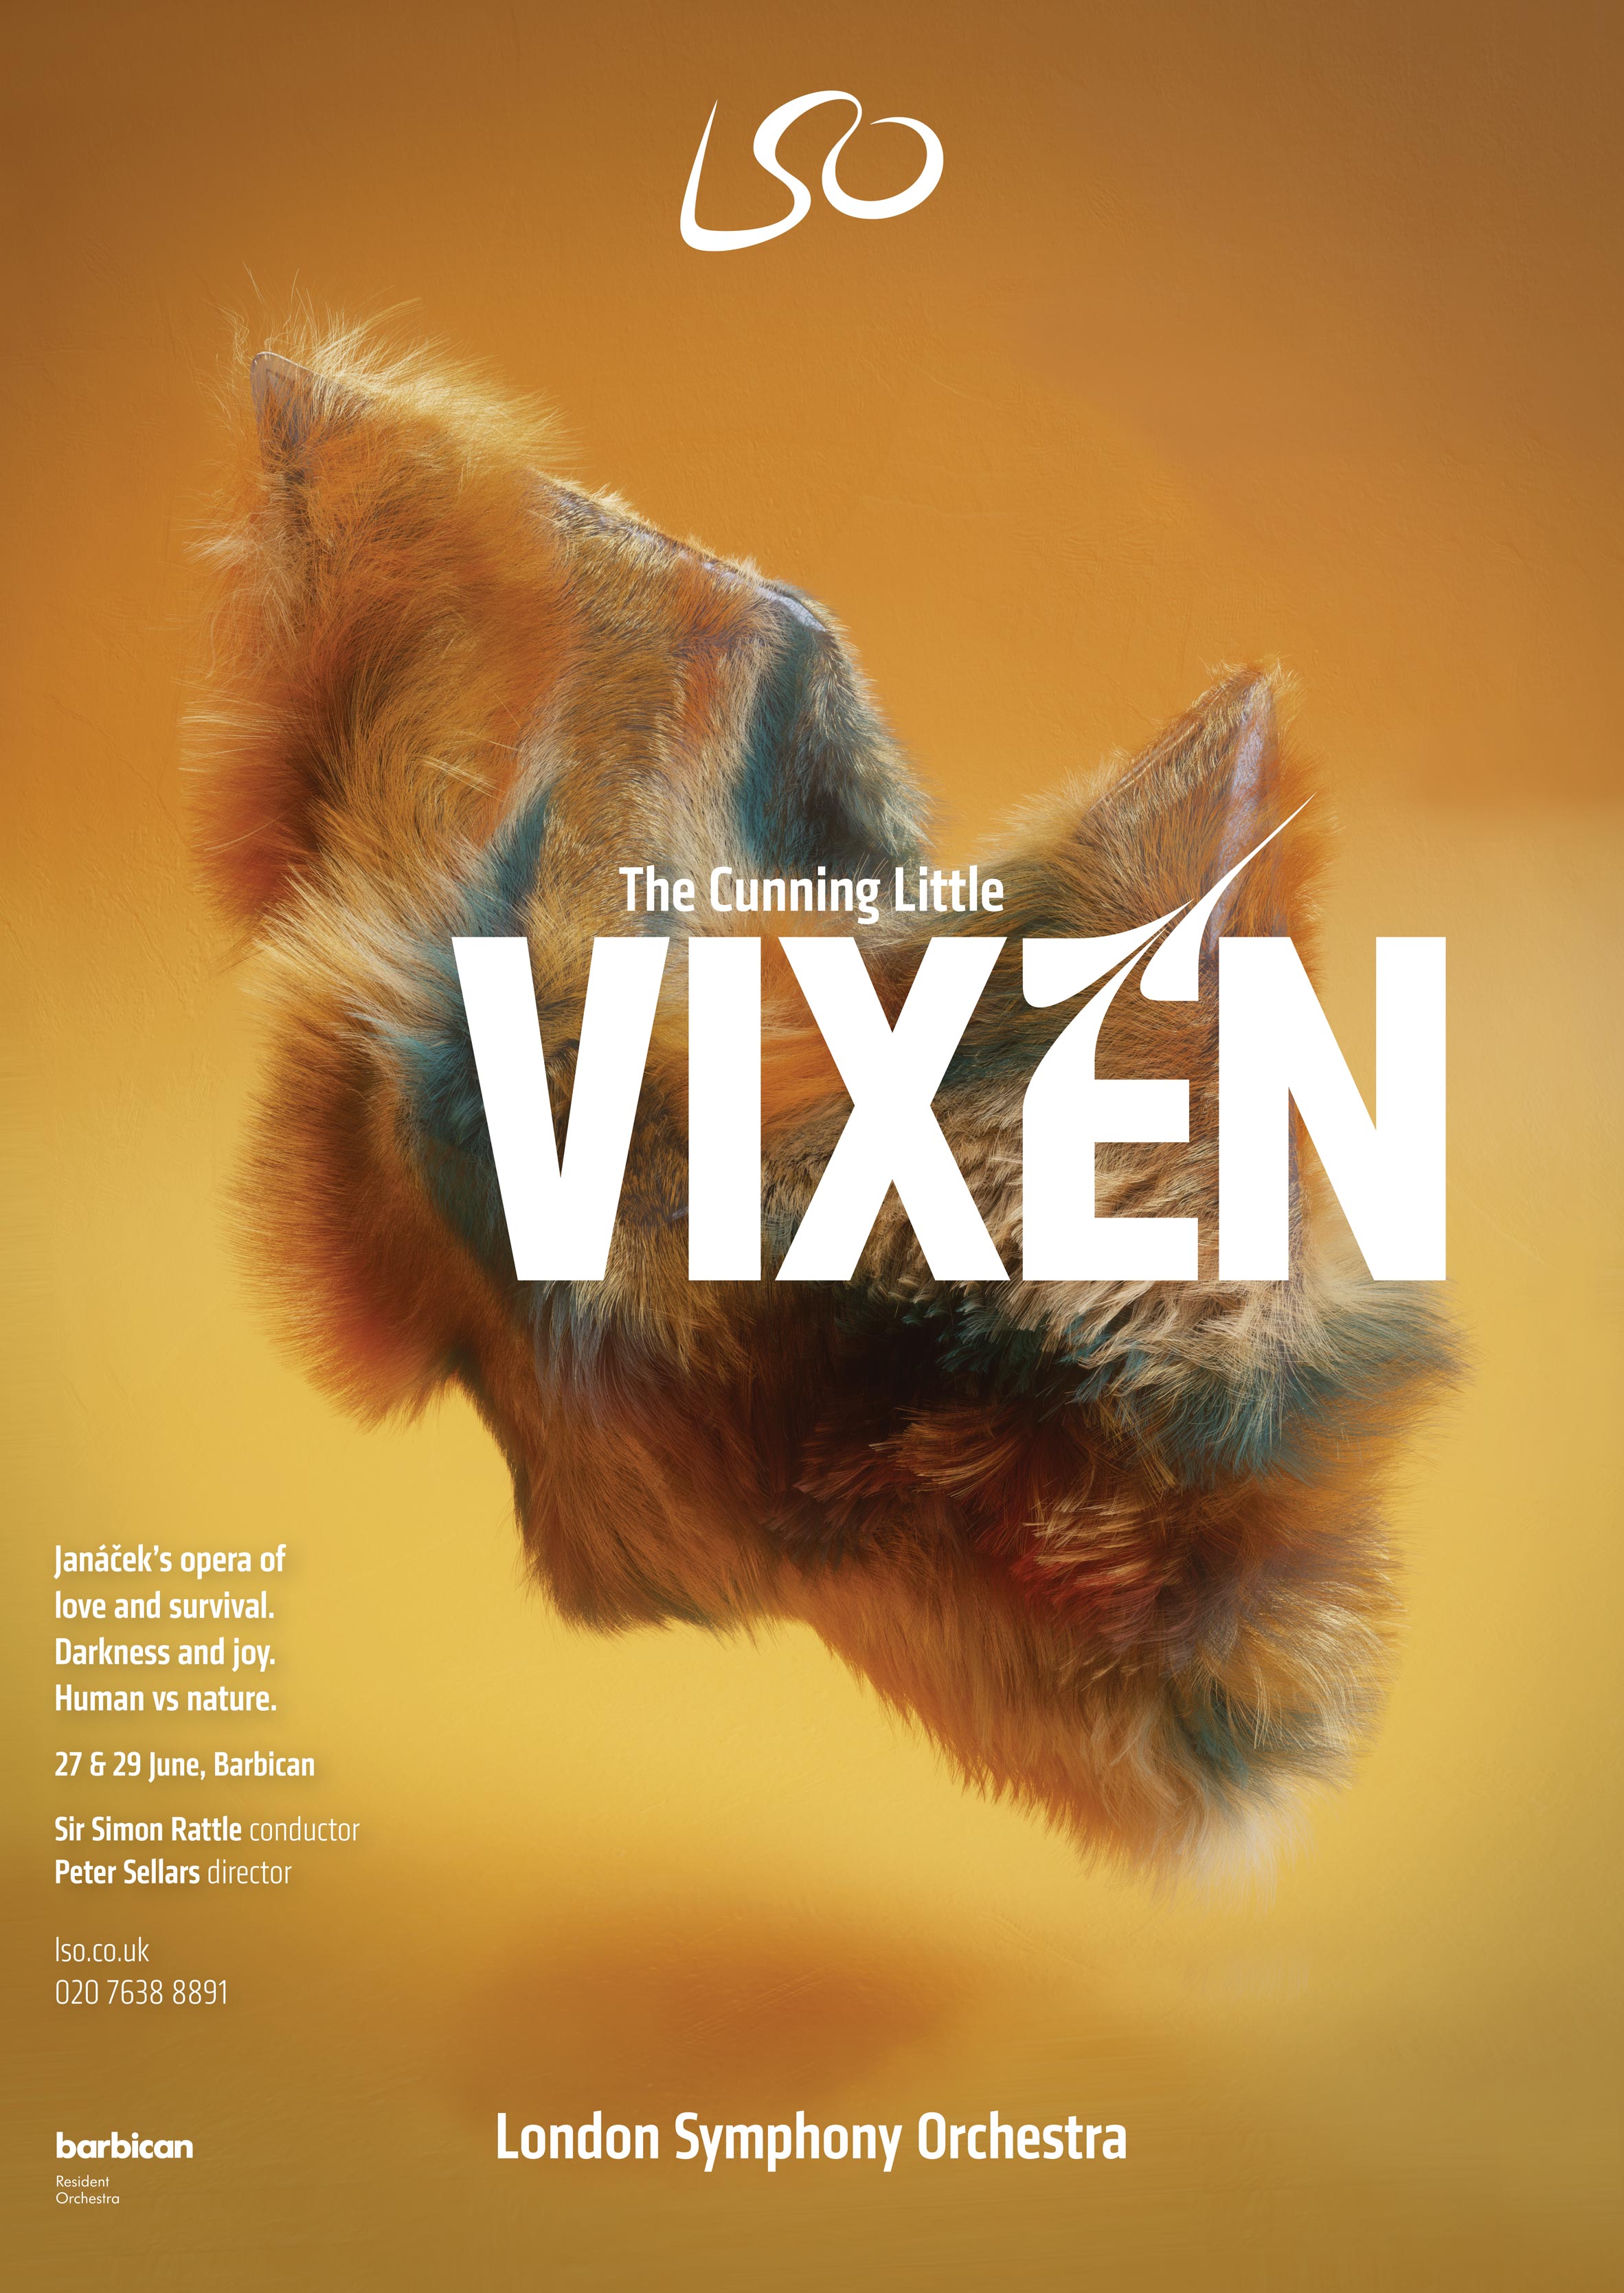 The Cunning Little Vixen by Superunion and Esteban Diacono